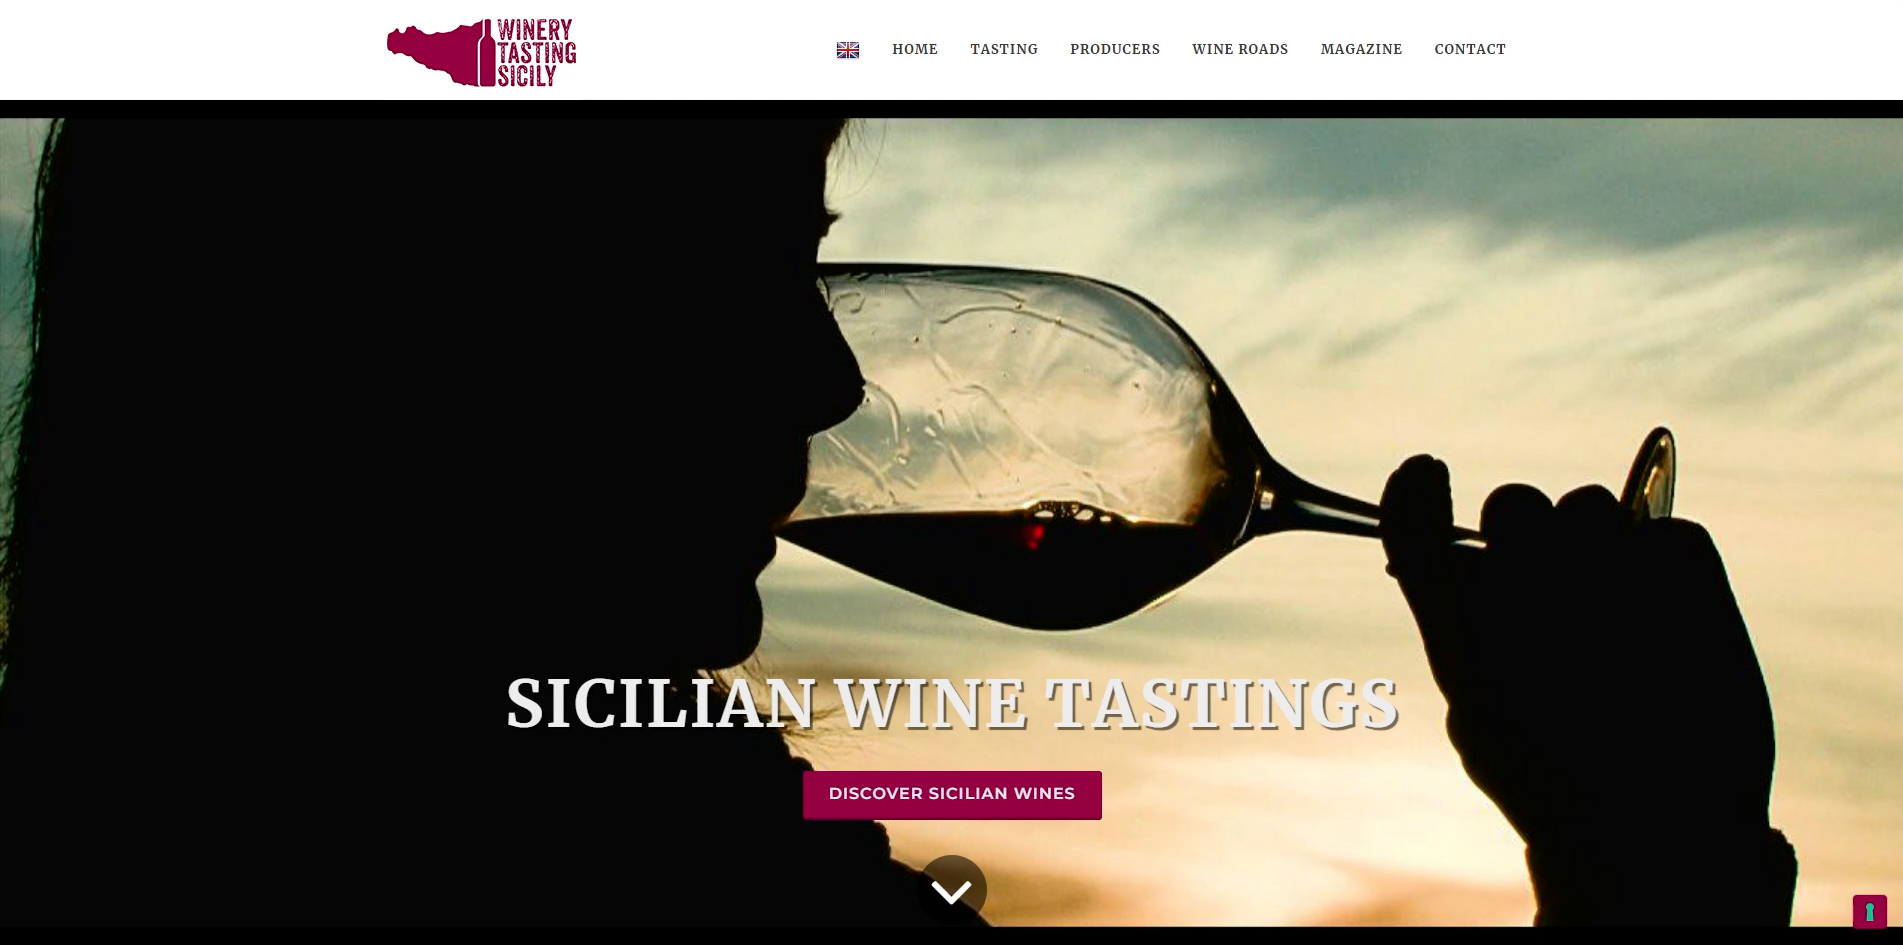 006-Winery-Tasting-Sicily-Sicily_TWFT_2024-1.jpg